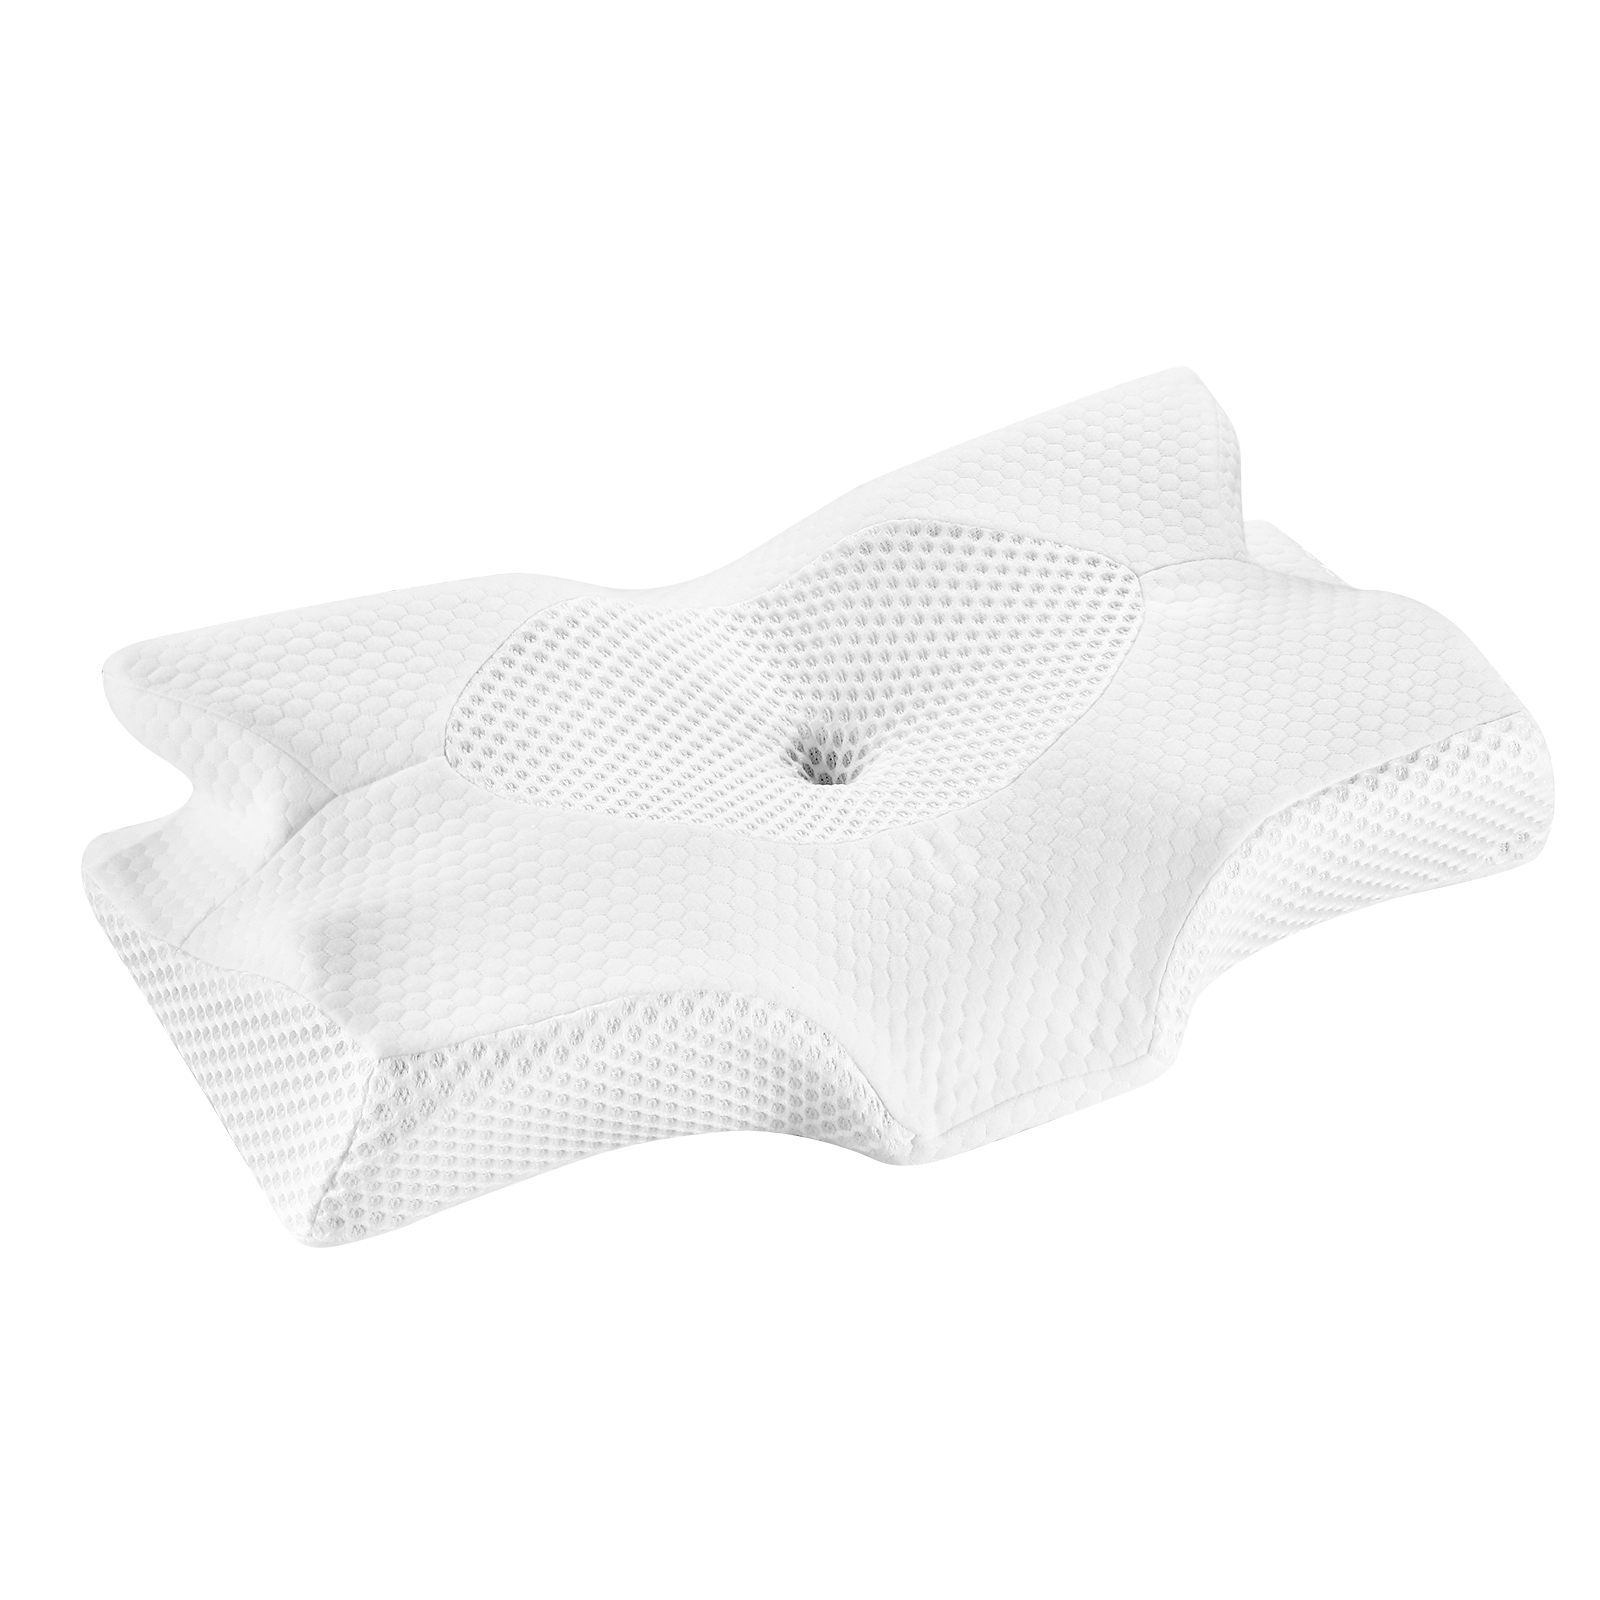 Luxdream Memory Foam Cervical Pillow